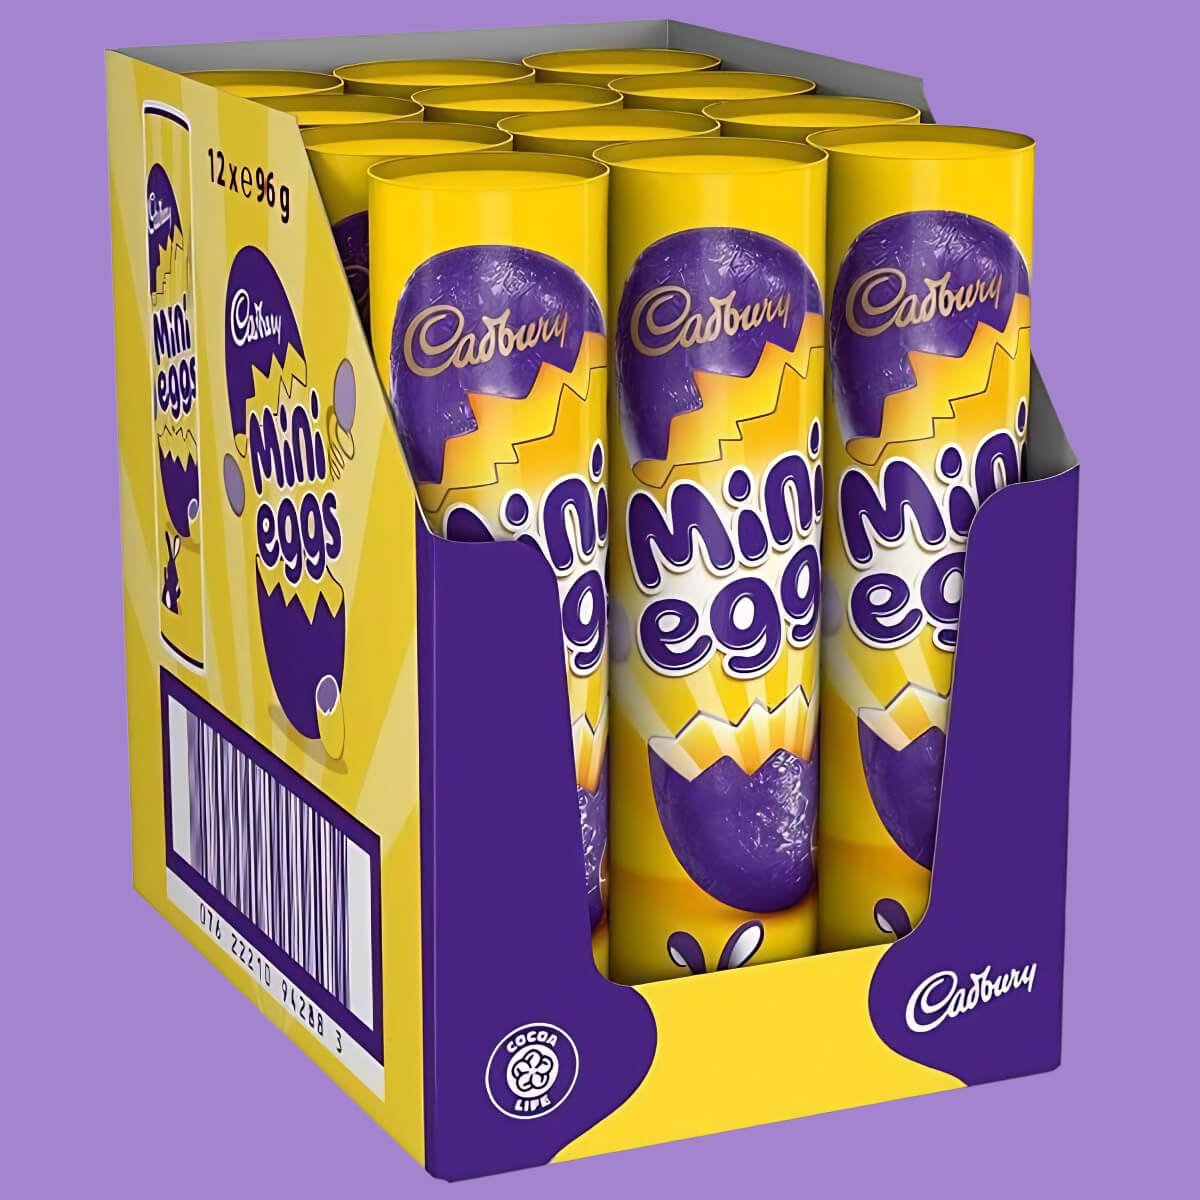 12 Cadbury Mini Egg tubes, upright in a display box